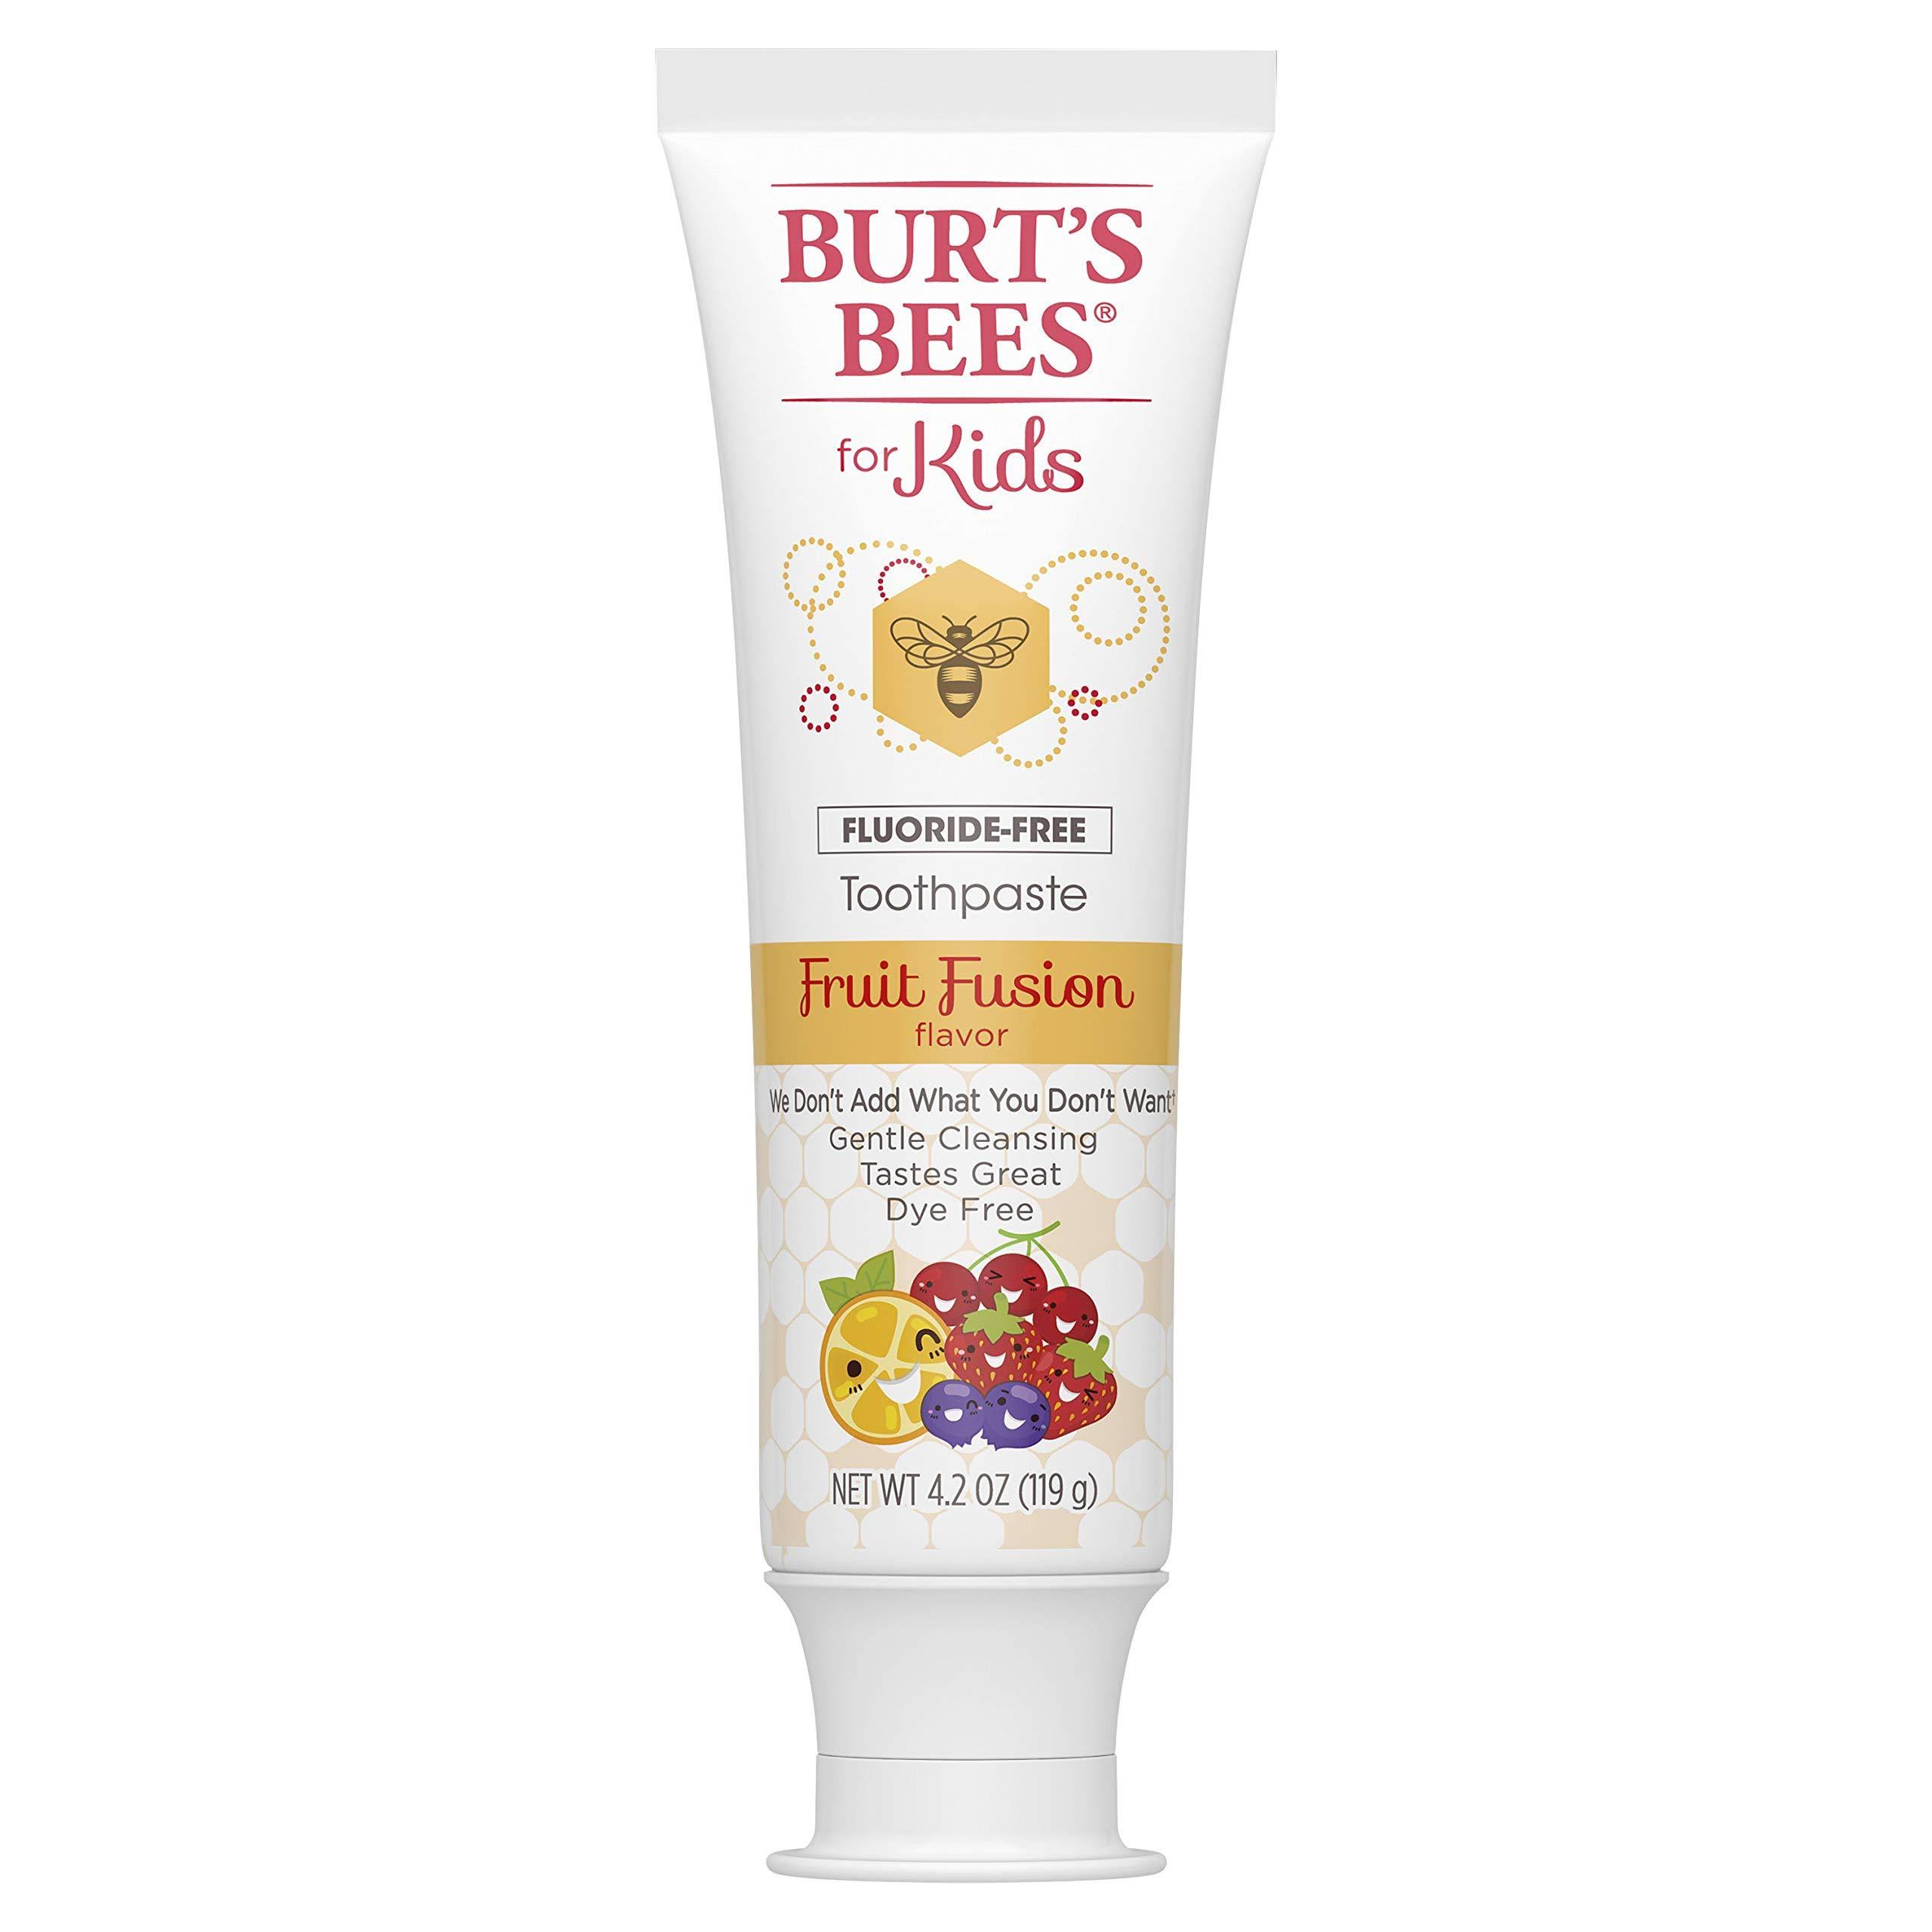 Burt's Bees For Kids Toothpaste - 4.2oz, Fruit Fusion